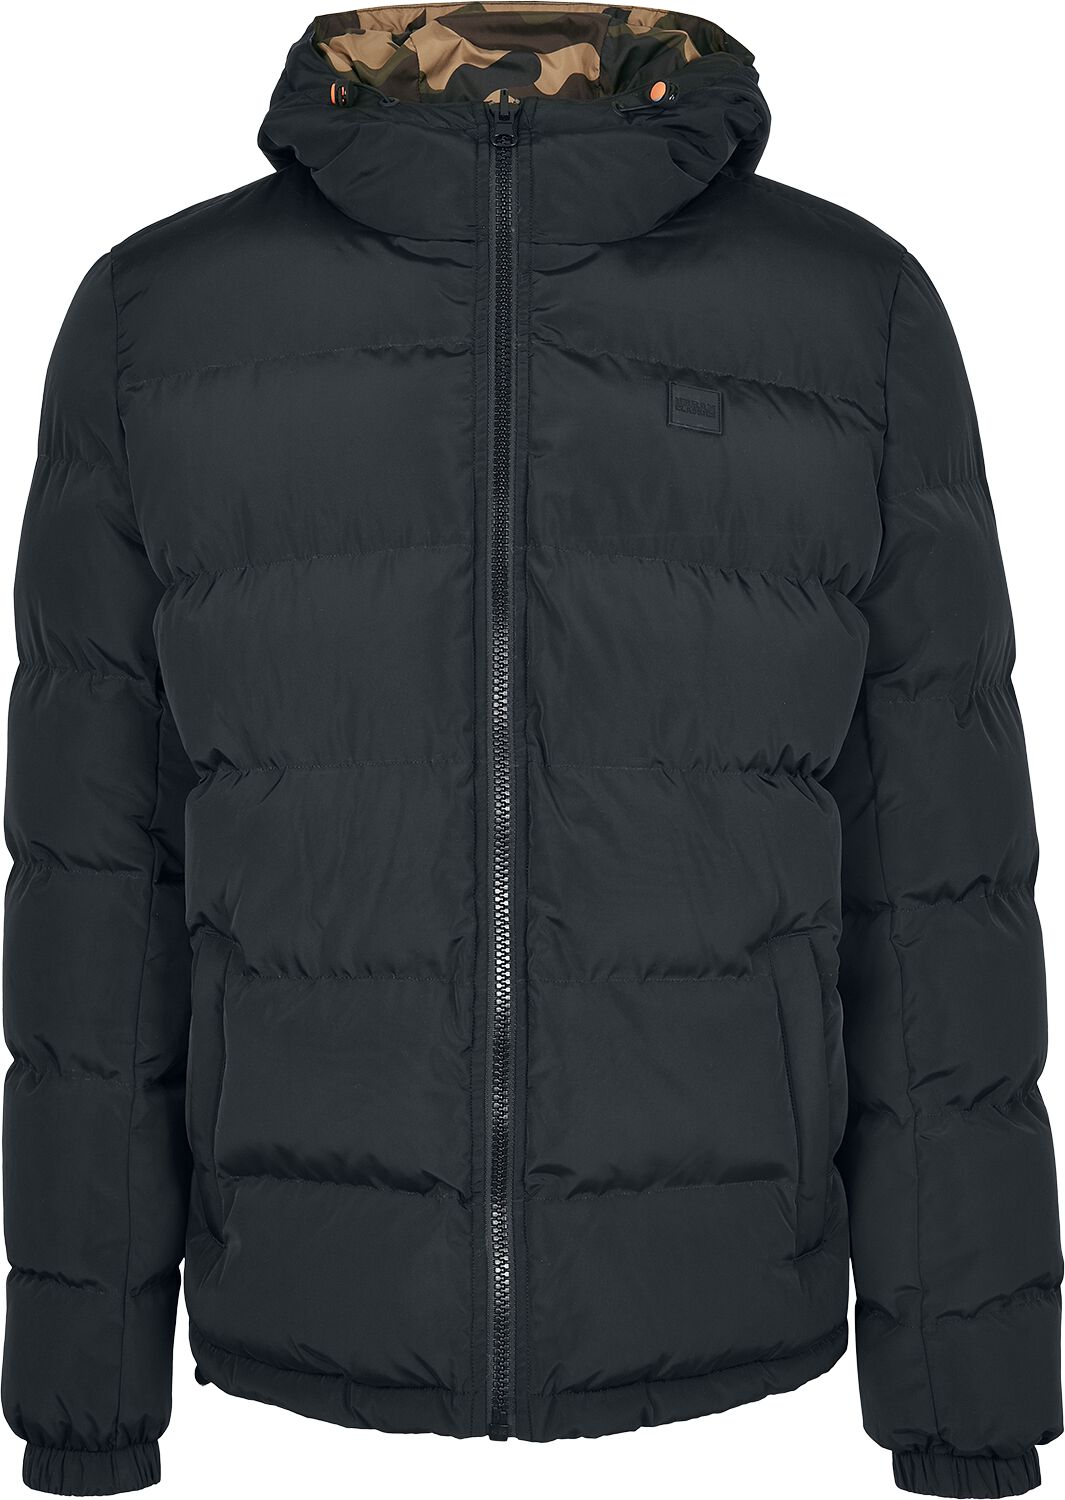 Urban Classics Reversible Hooded Puffer Jacket Winter Jacket black woodland